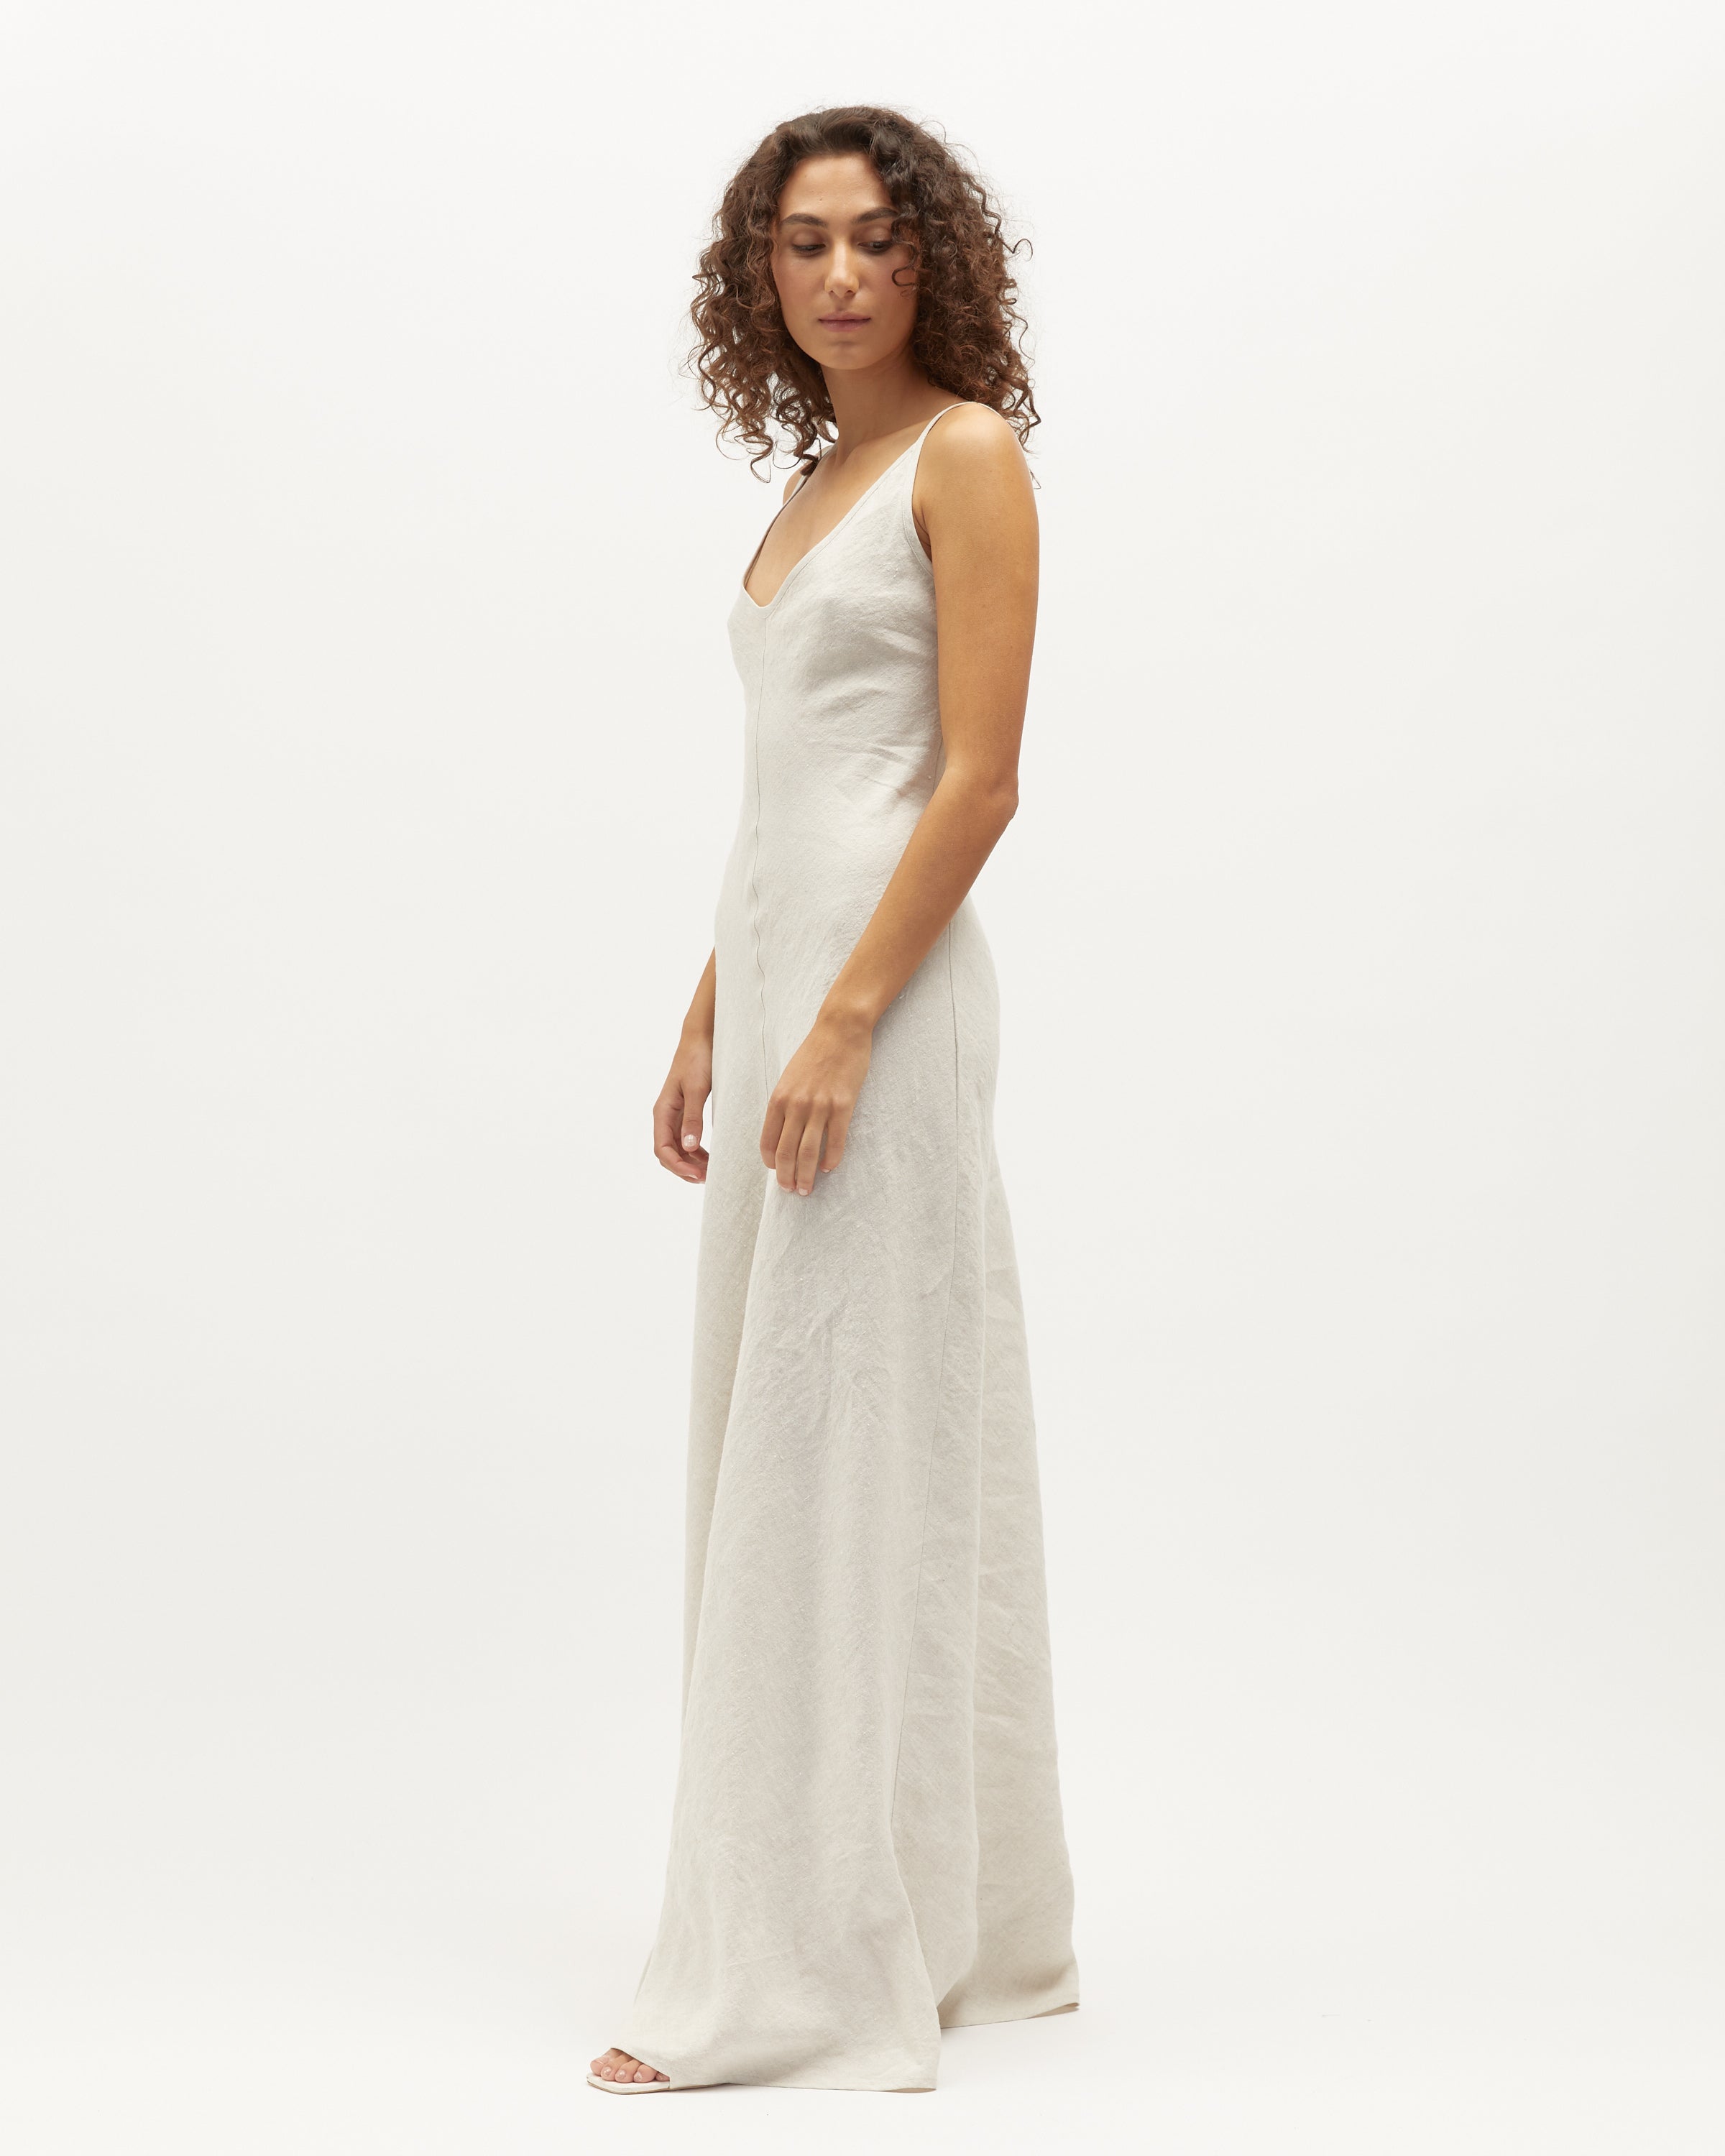 Sloane Dress | Sand Washed Linen $360